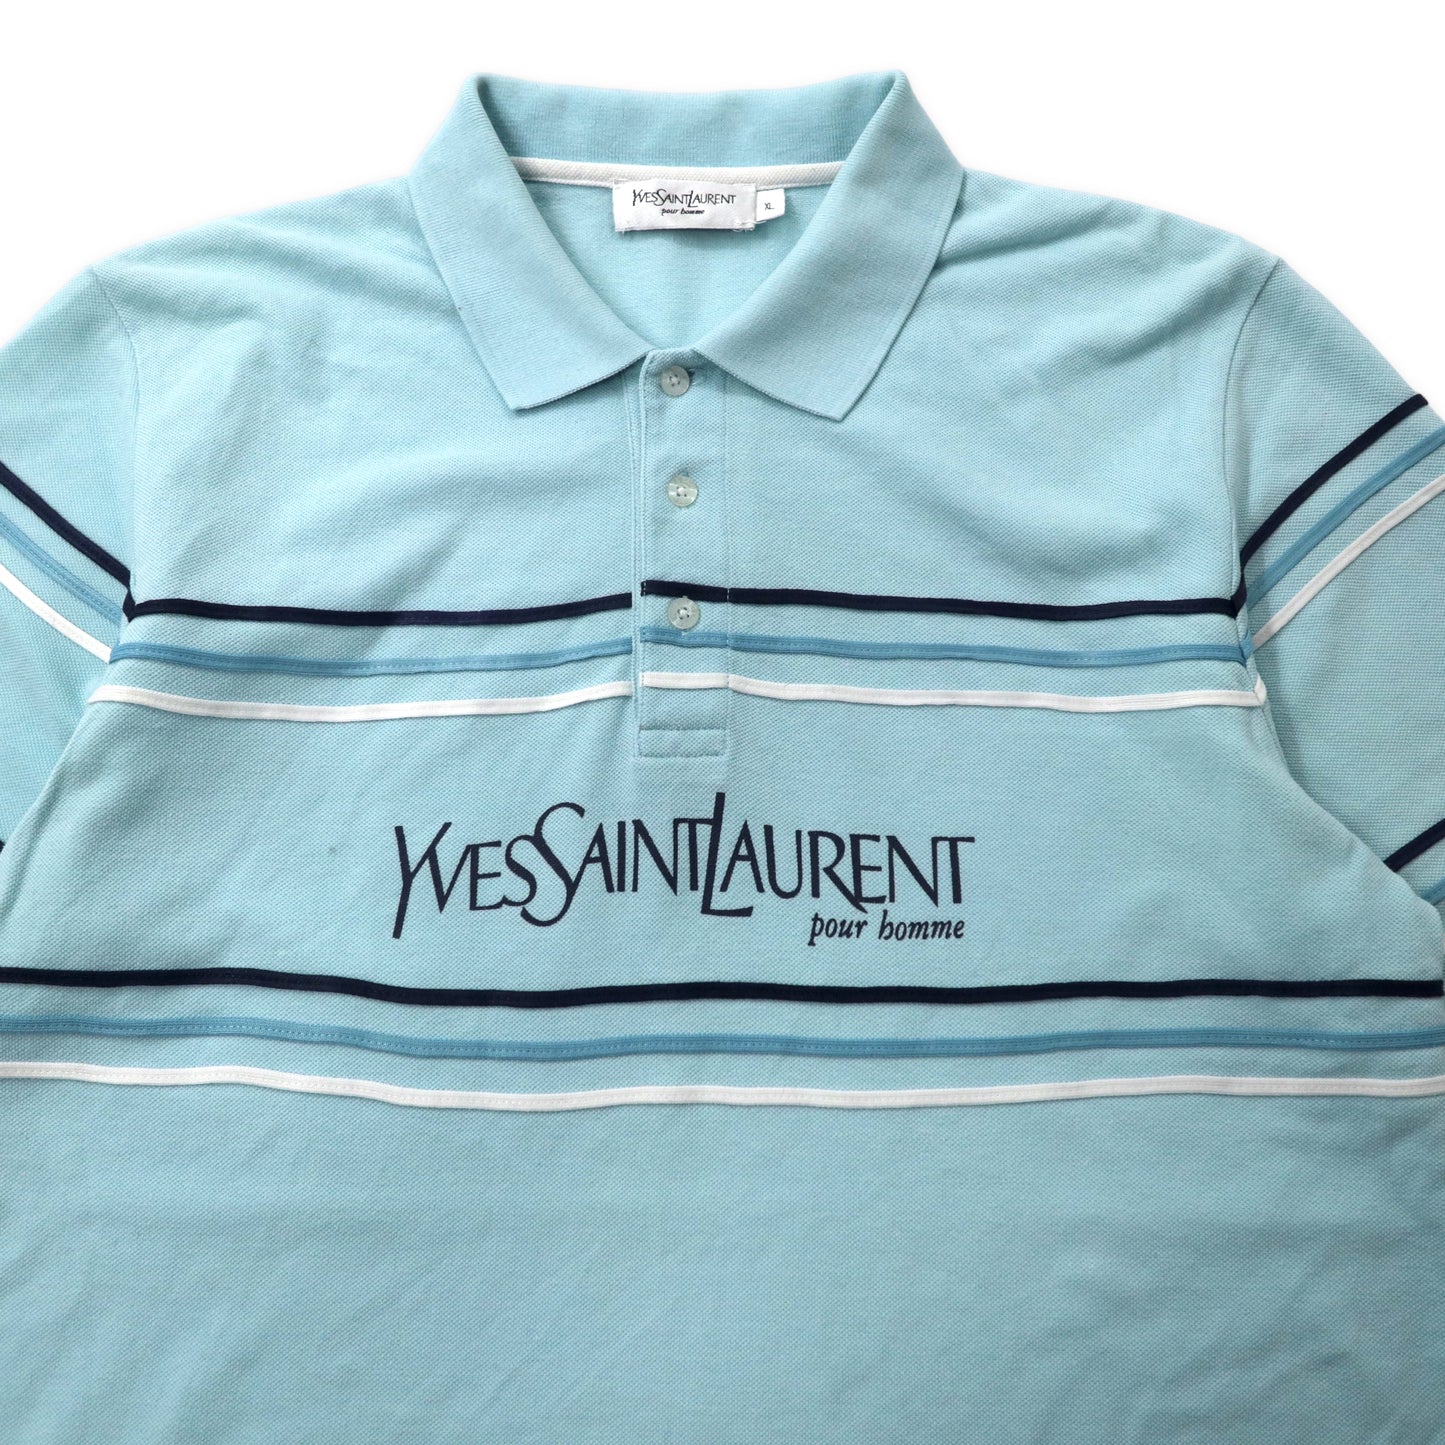 YVES SAINT LAURENT pour homme ロゴプリント ポロシャツ XL ブルー コットン オールド